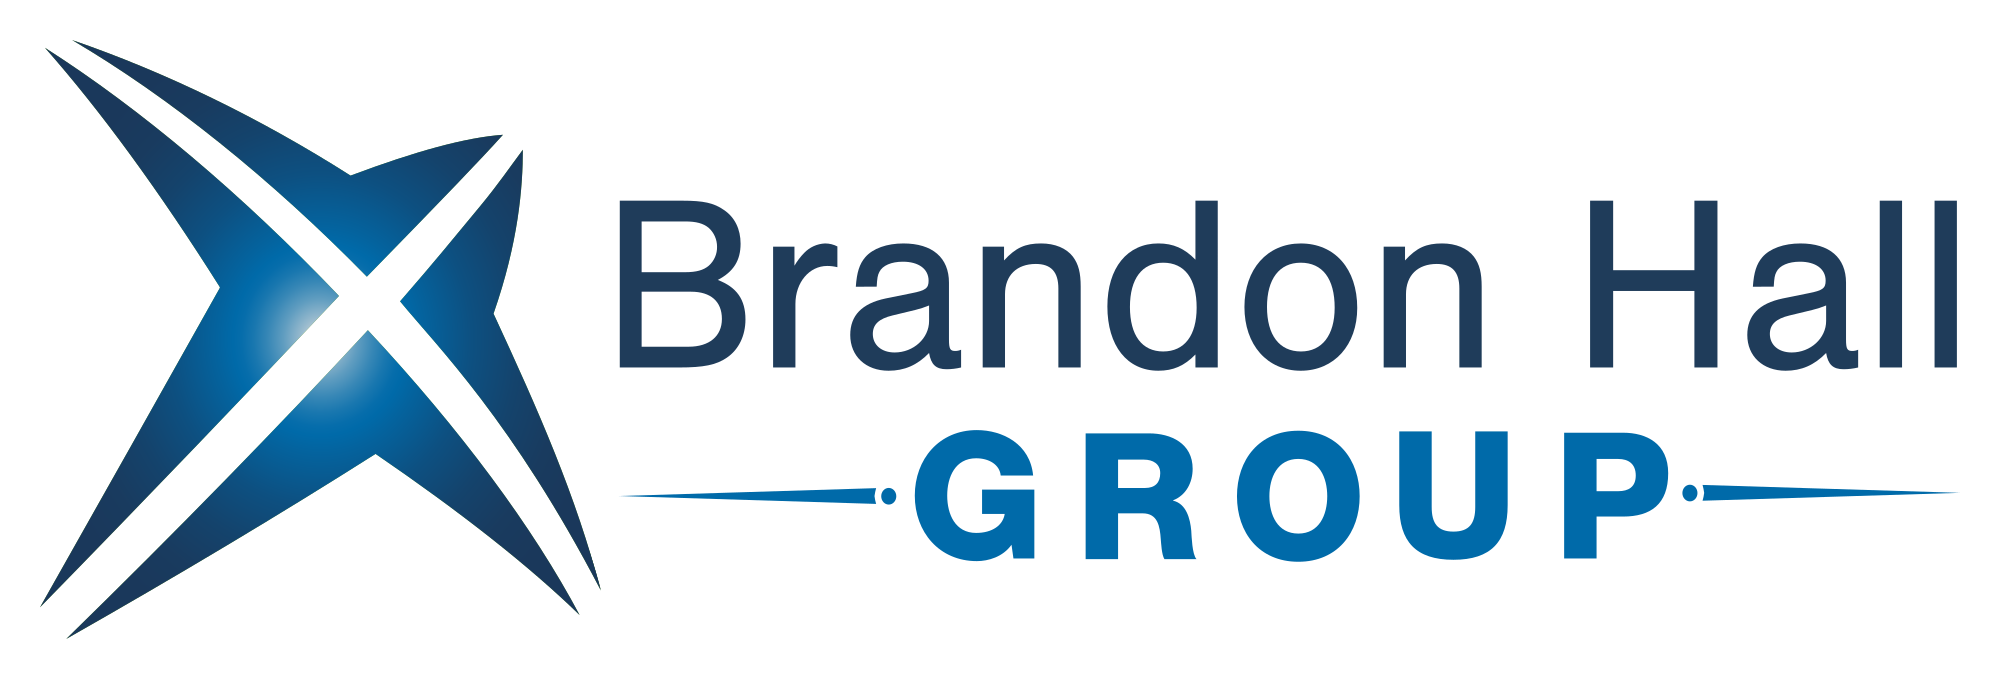 Brandon Hall. Brandon logo. We-on Group логотип. Uhlmann Group logo.